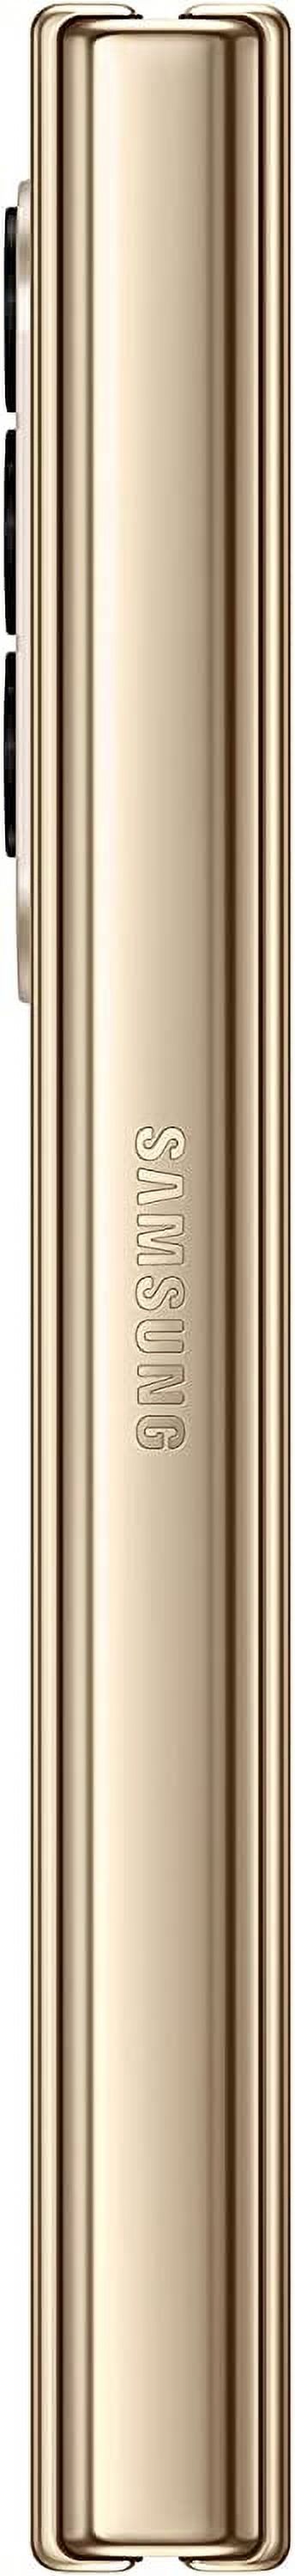 Restored Samsung Galaxy Z Fold 4 5G F936U 512GB Verizon (Beige) Smartphone - (Refurbished) - image 4 of 5